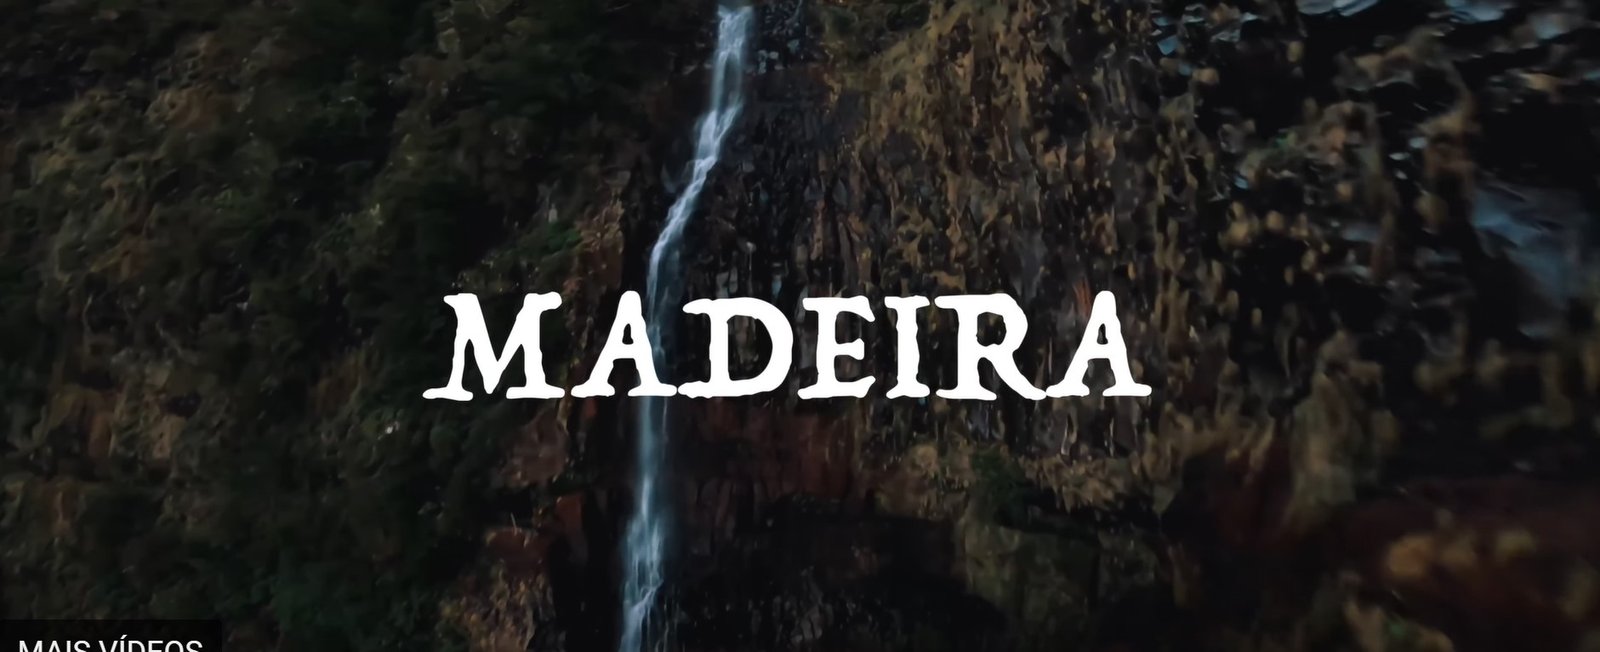 Drone ‘Pilot’ Shows how Madeira turns anyone’s Head Around